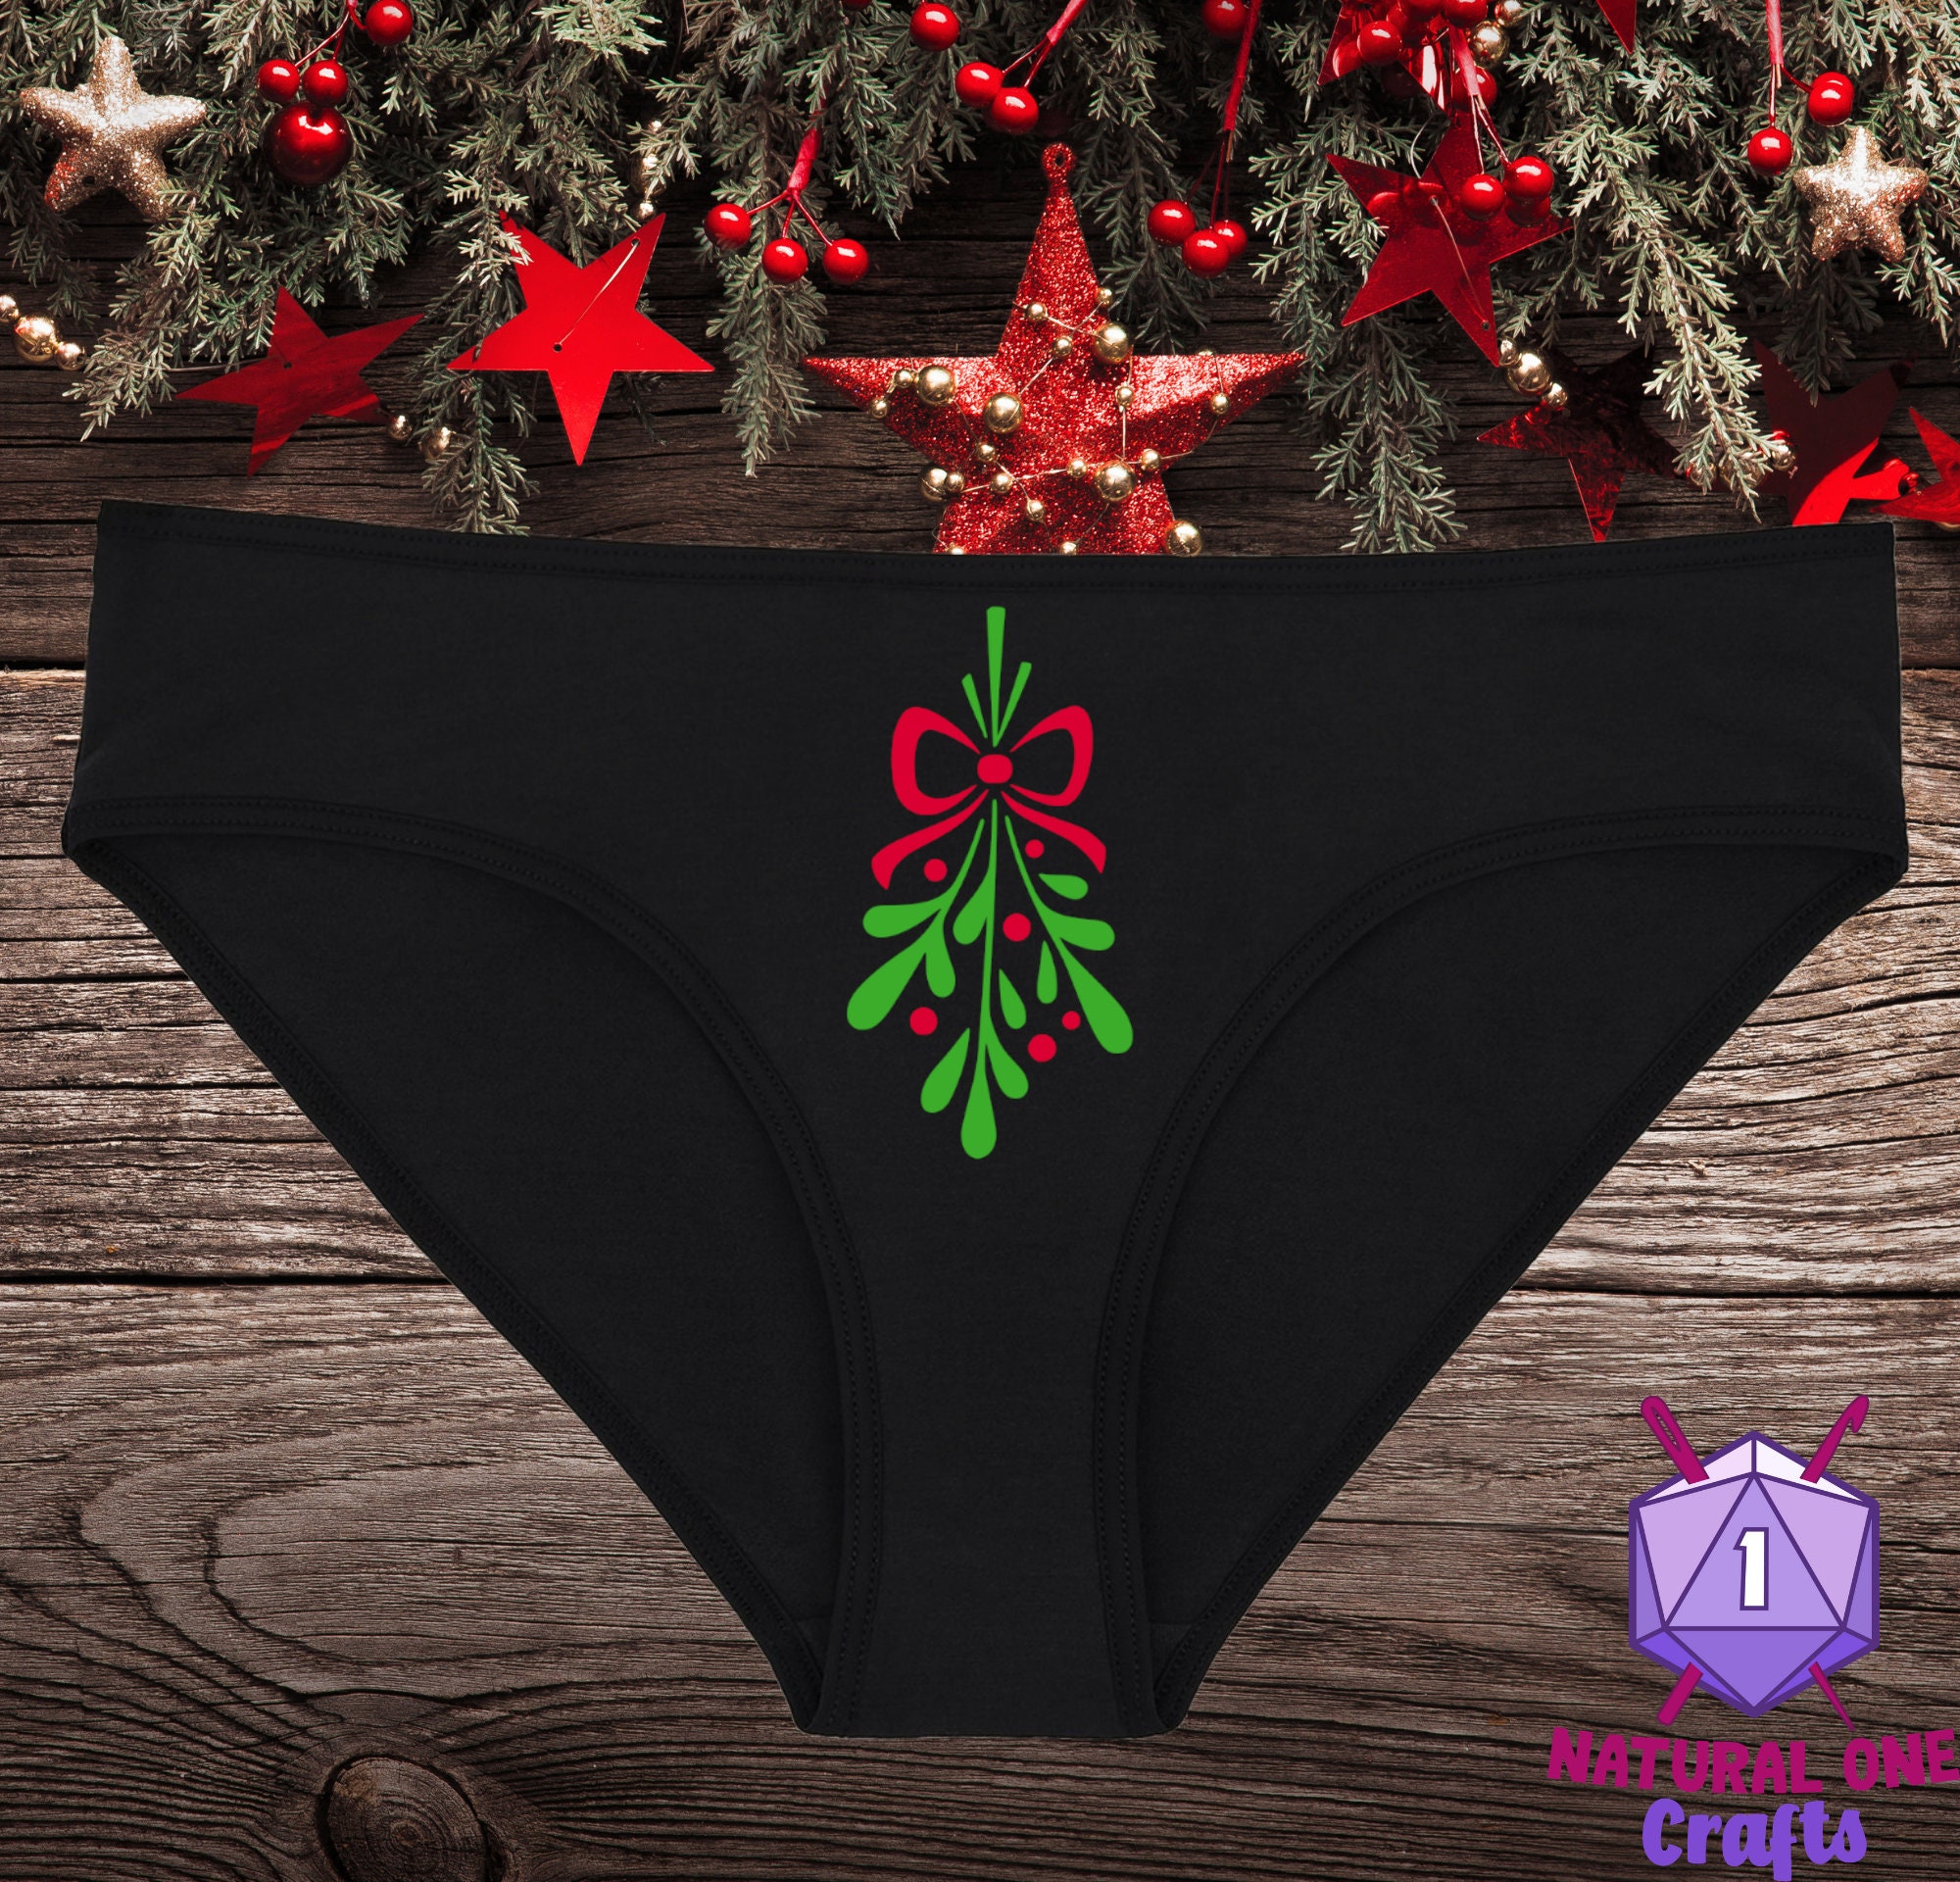 Mistletoe Black Underwear, Dainty & Dangerous Christmas Panties